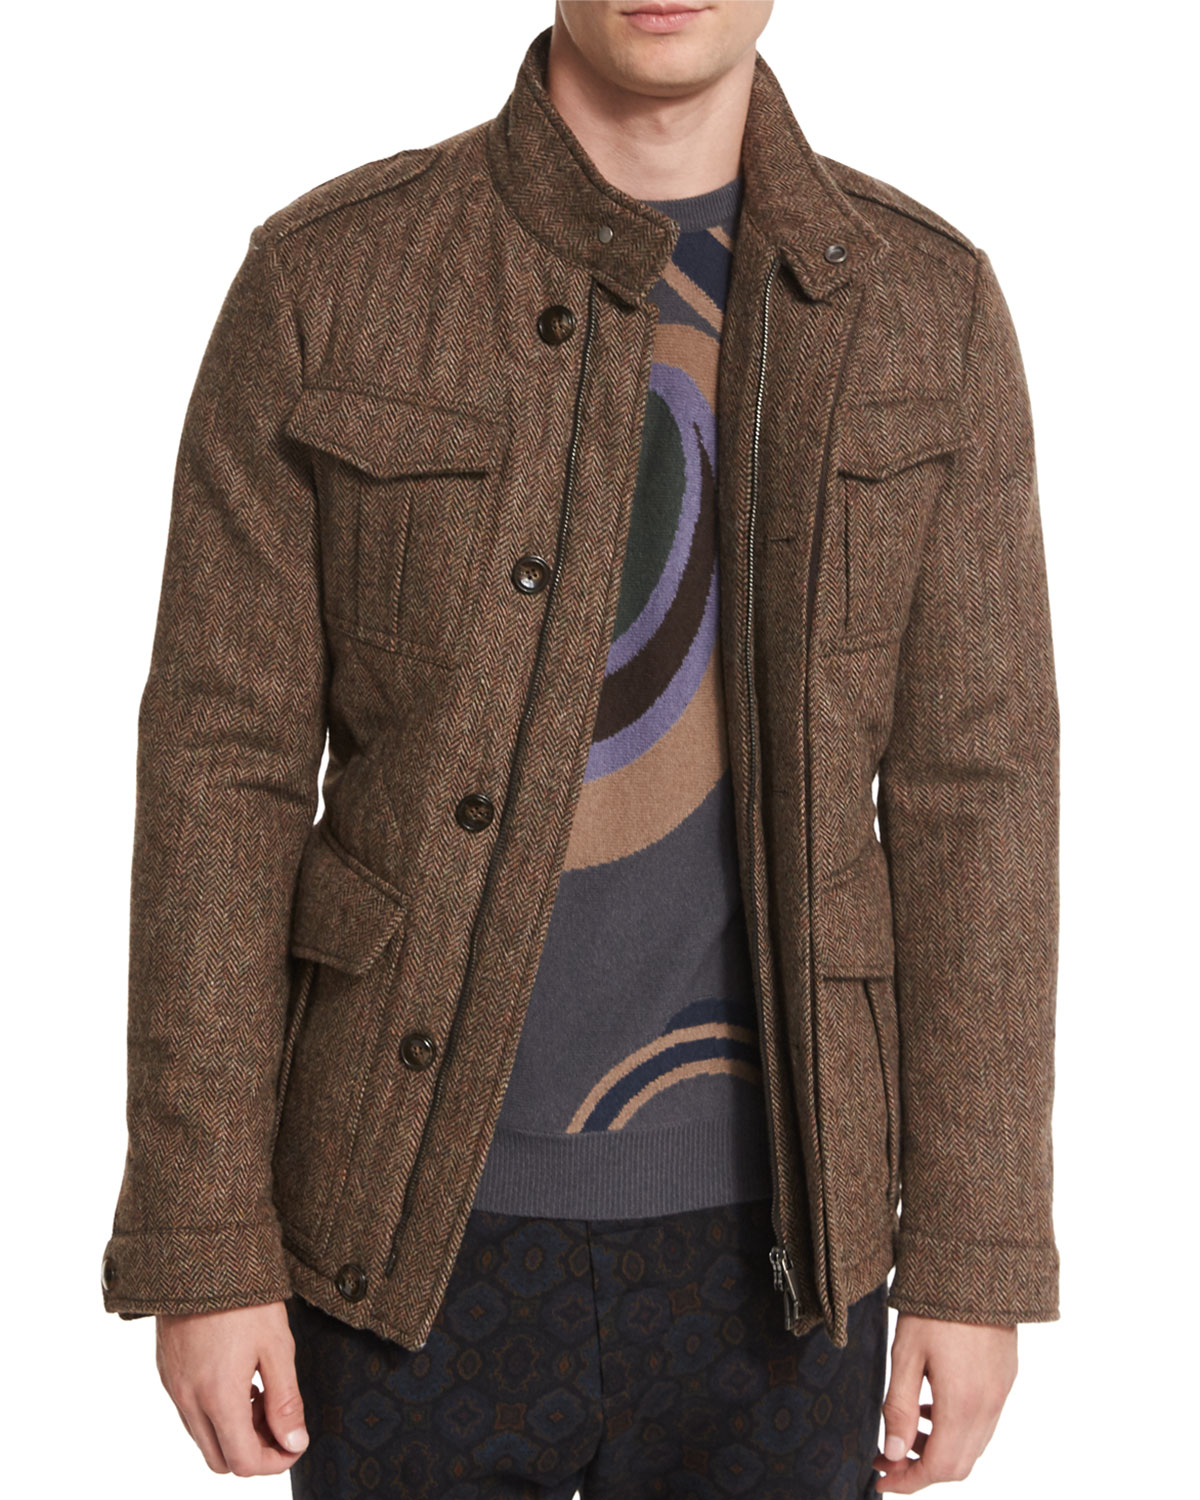 Lyst - Etro Herringbone Wool Safari Jacket in Brown for Men